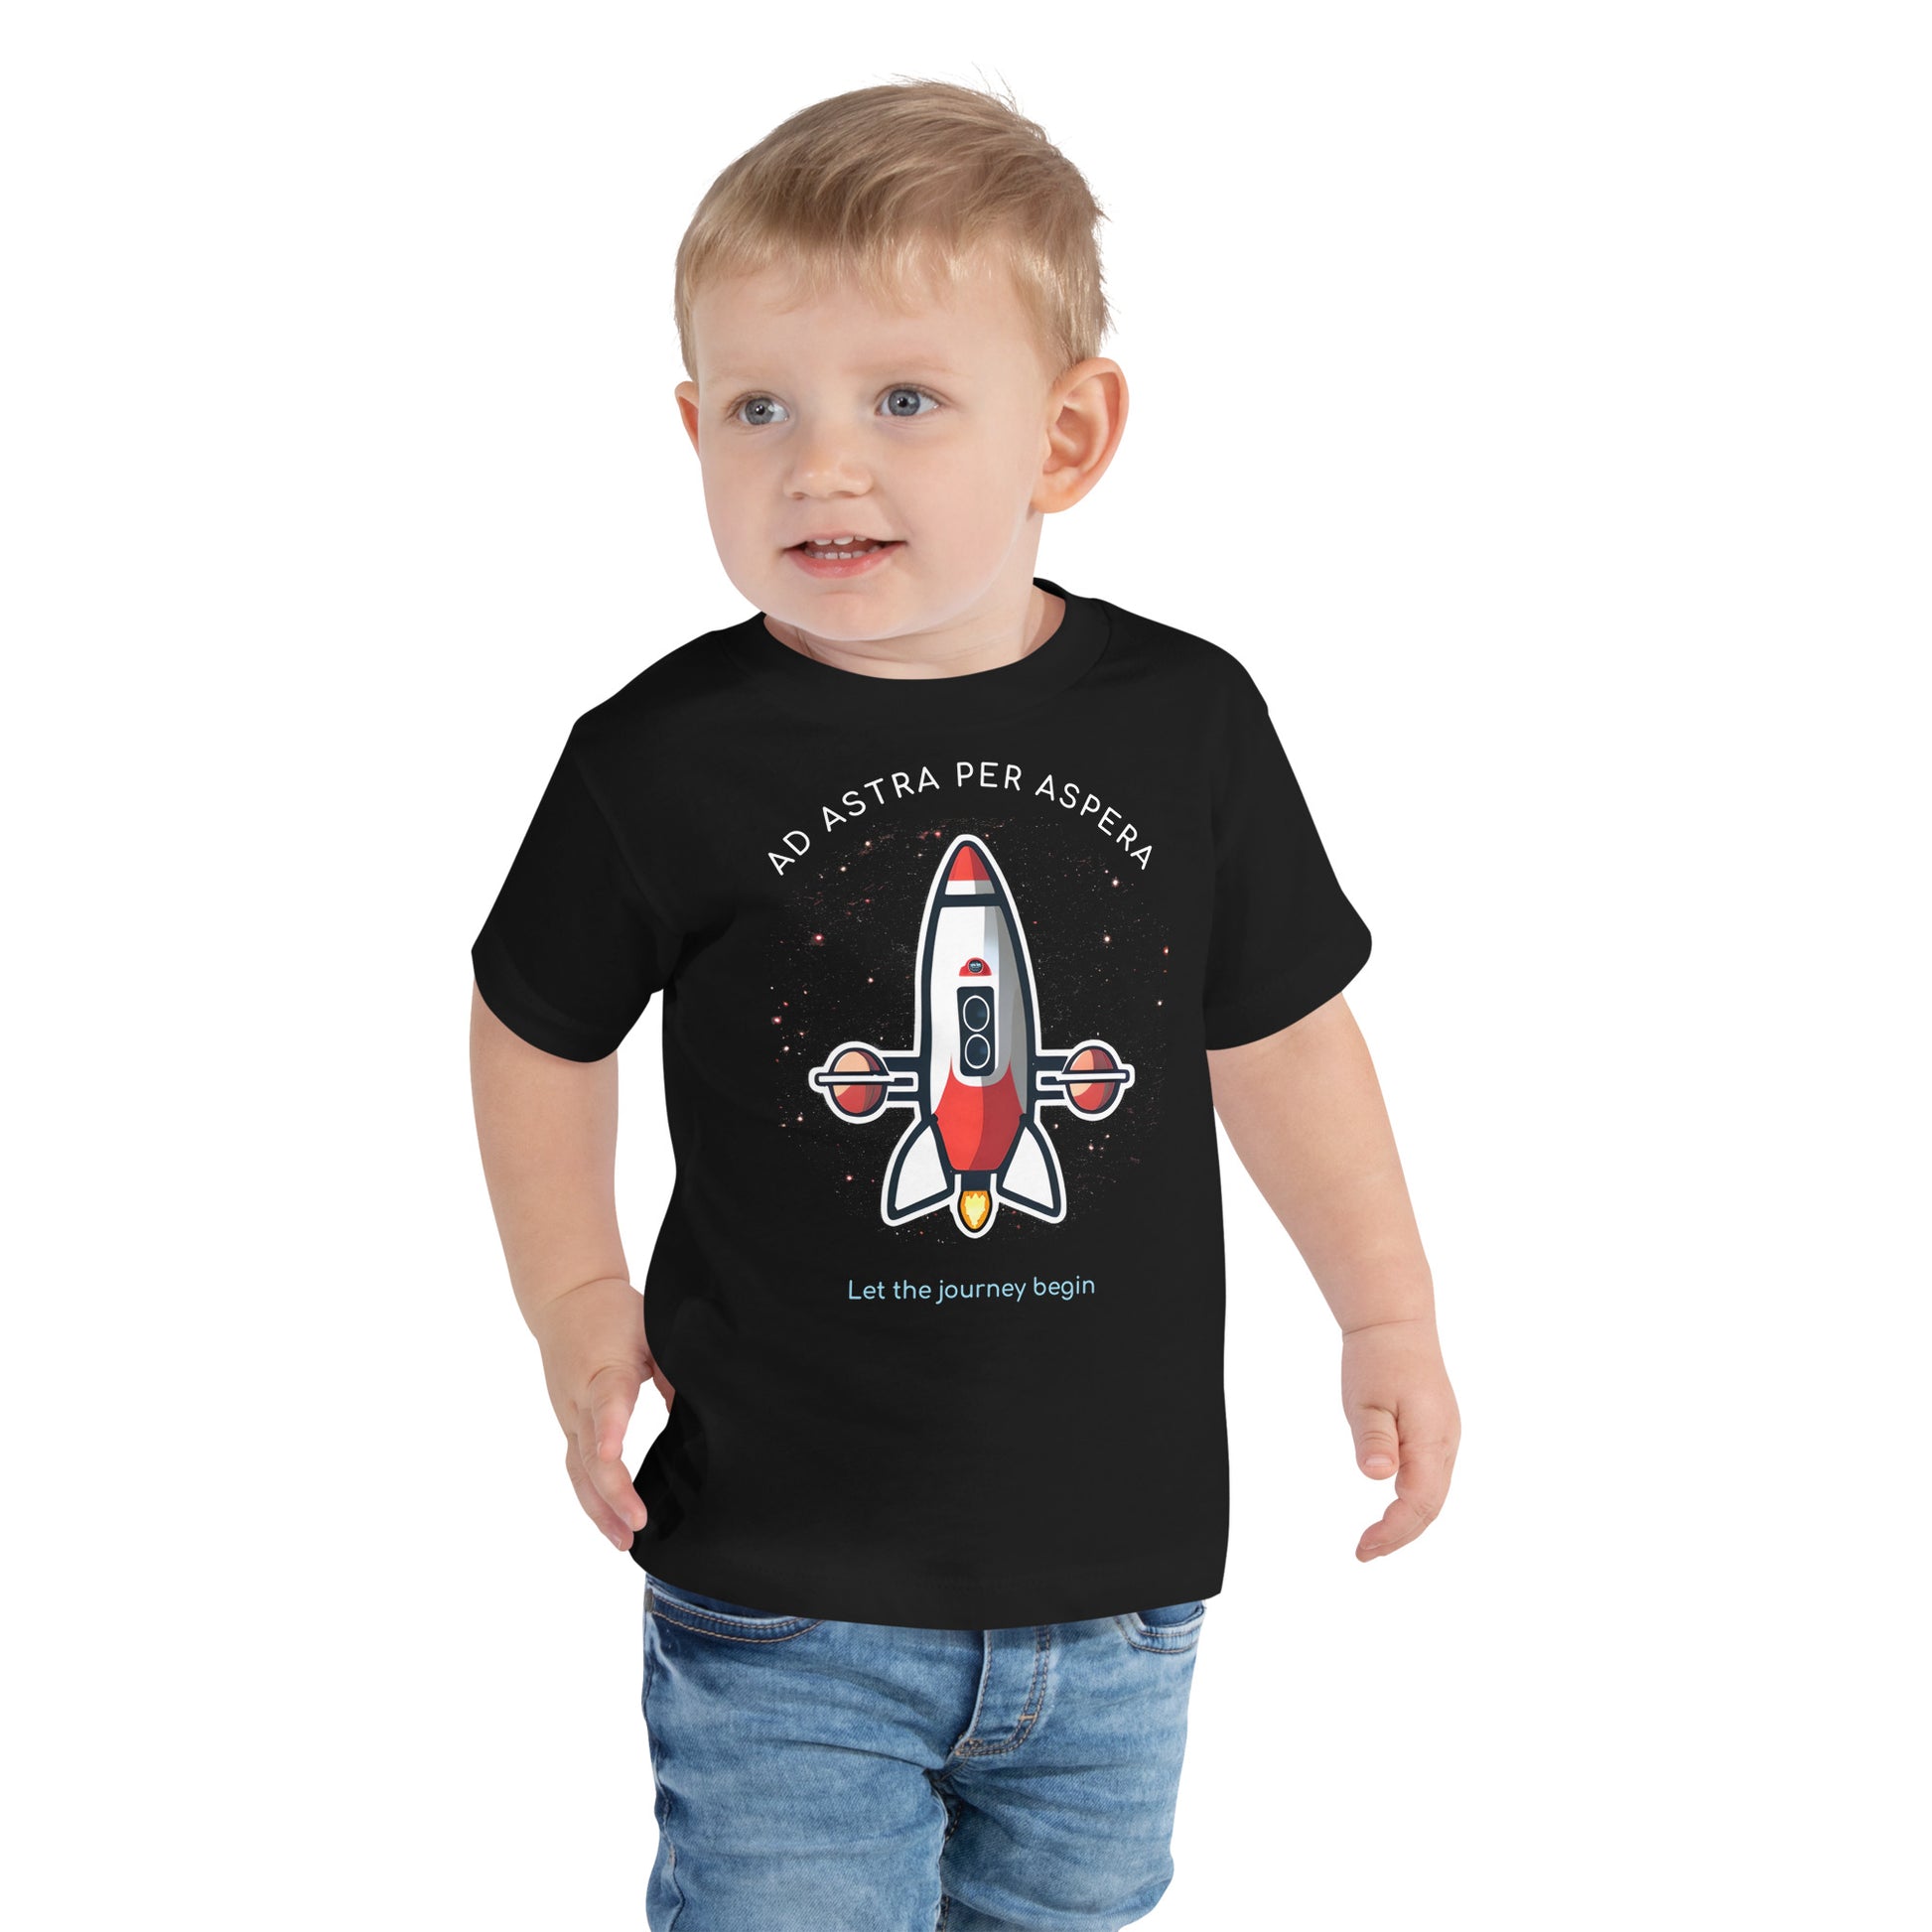 boy wearing black rocketship t-shirt